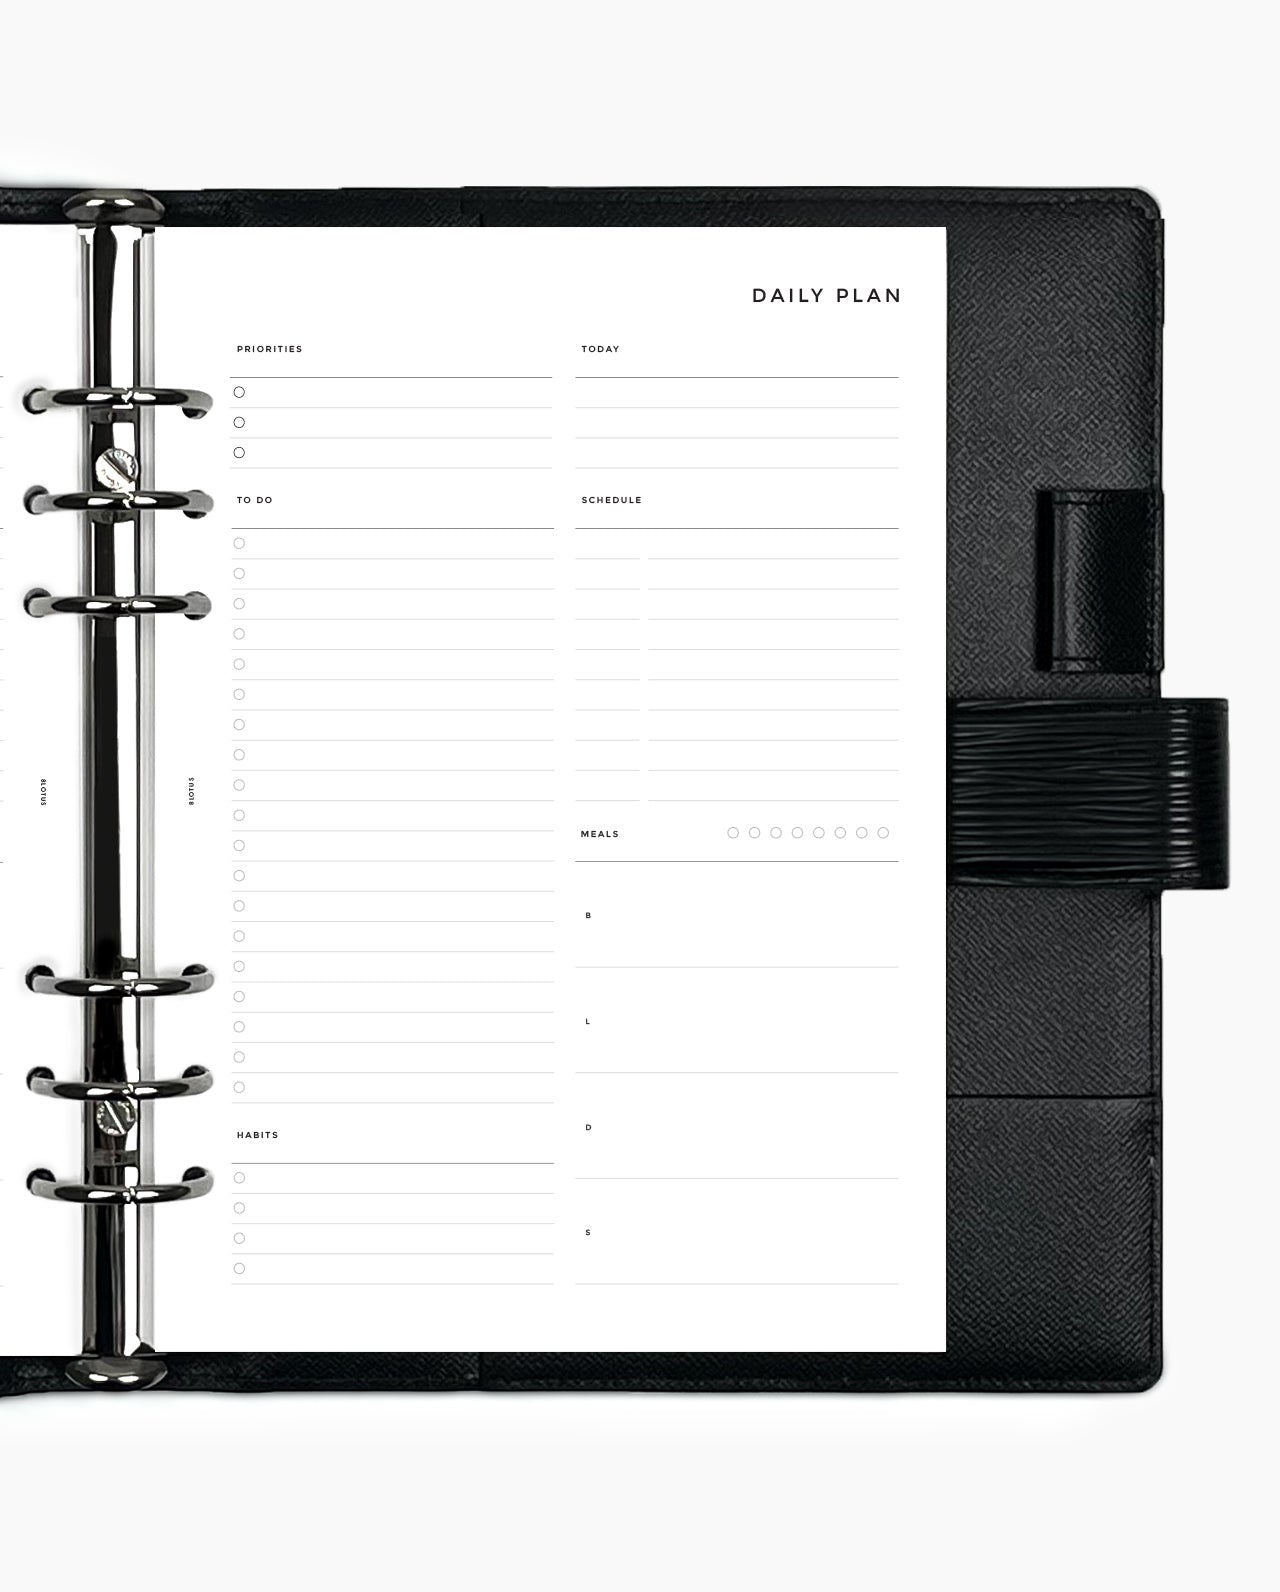 Louis Vuitton mm agenda and gm desk agenda set up, inserts